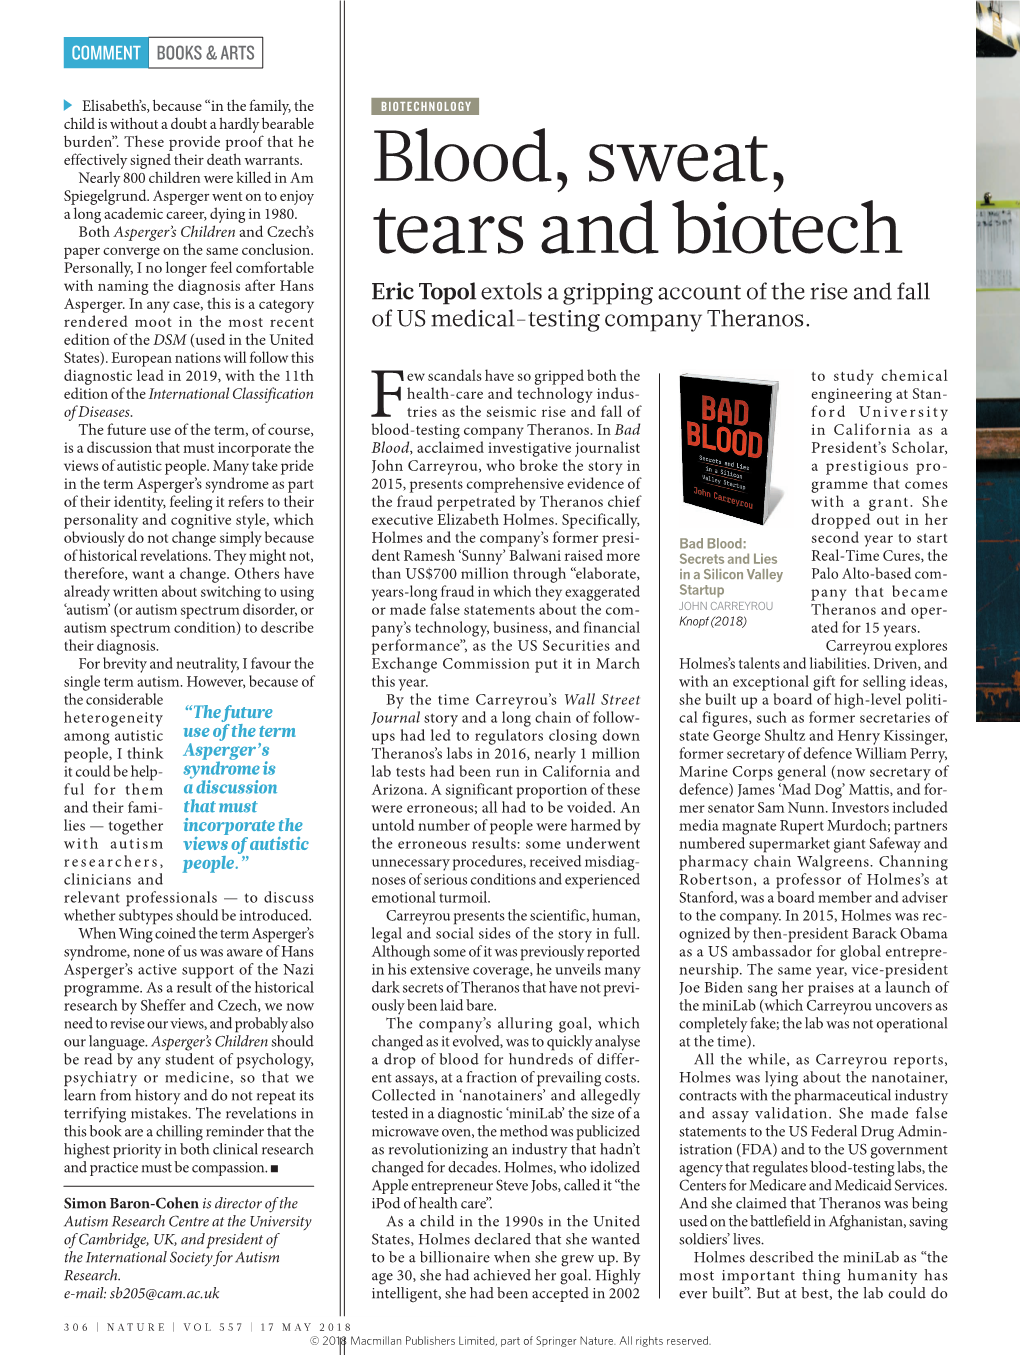 Blood, Sweat, Tears and Biotech